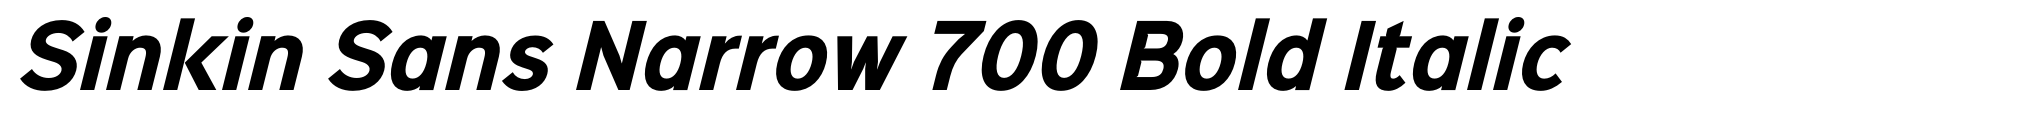 Sinkin Sans Narrow 700 Bold Italic image